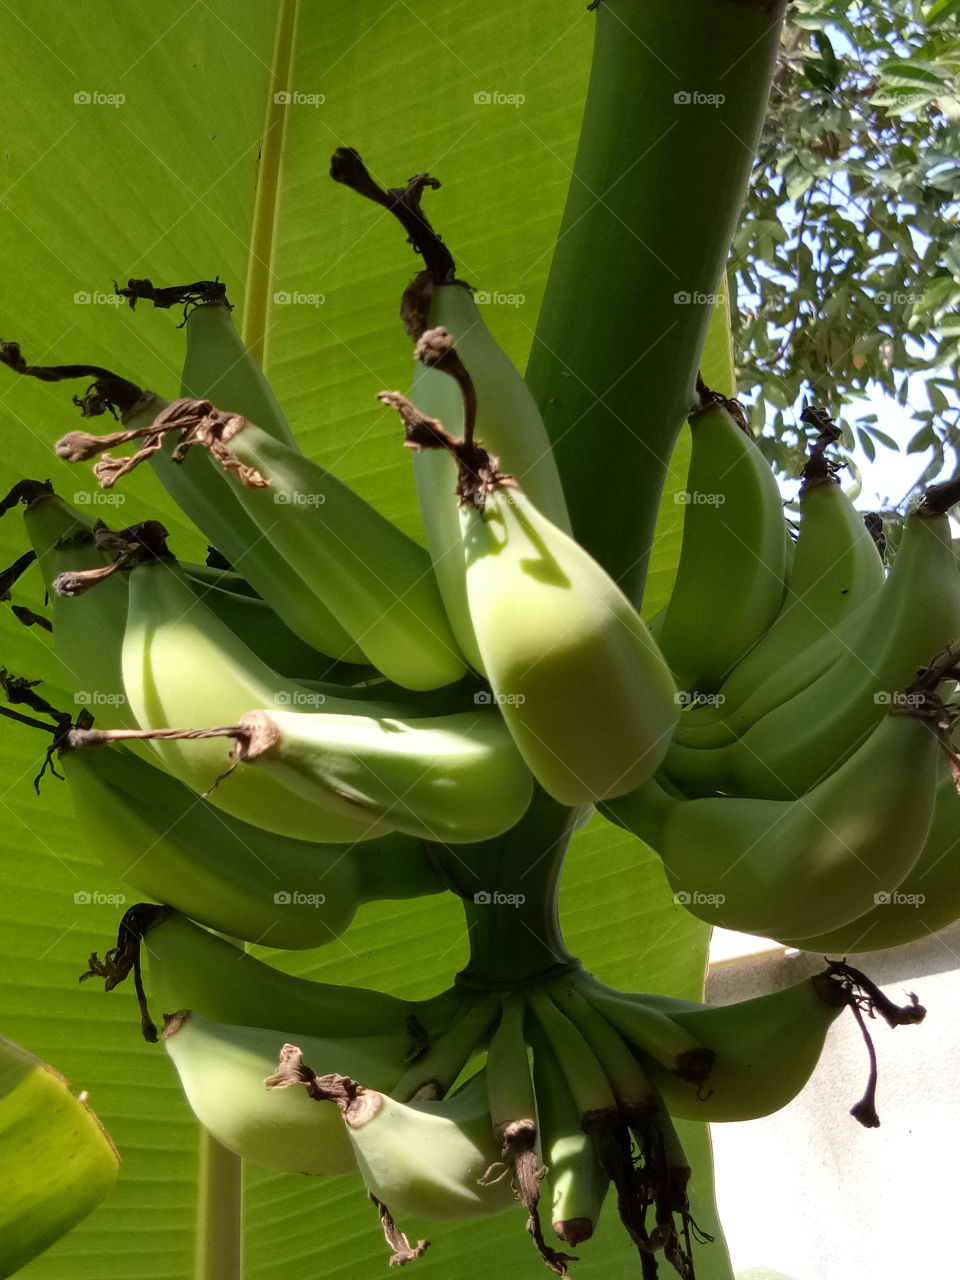 banana : thaifruit : thaibanana : green